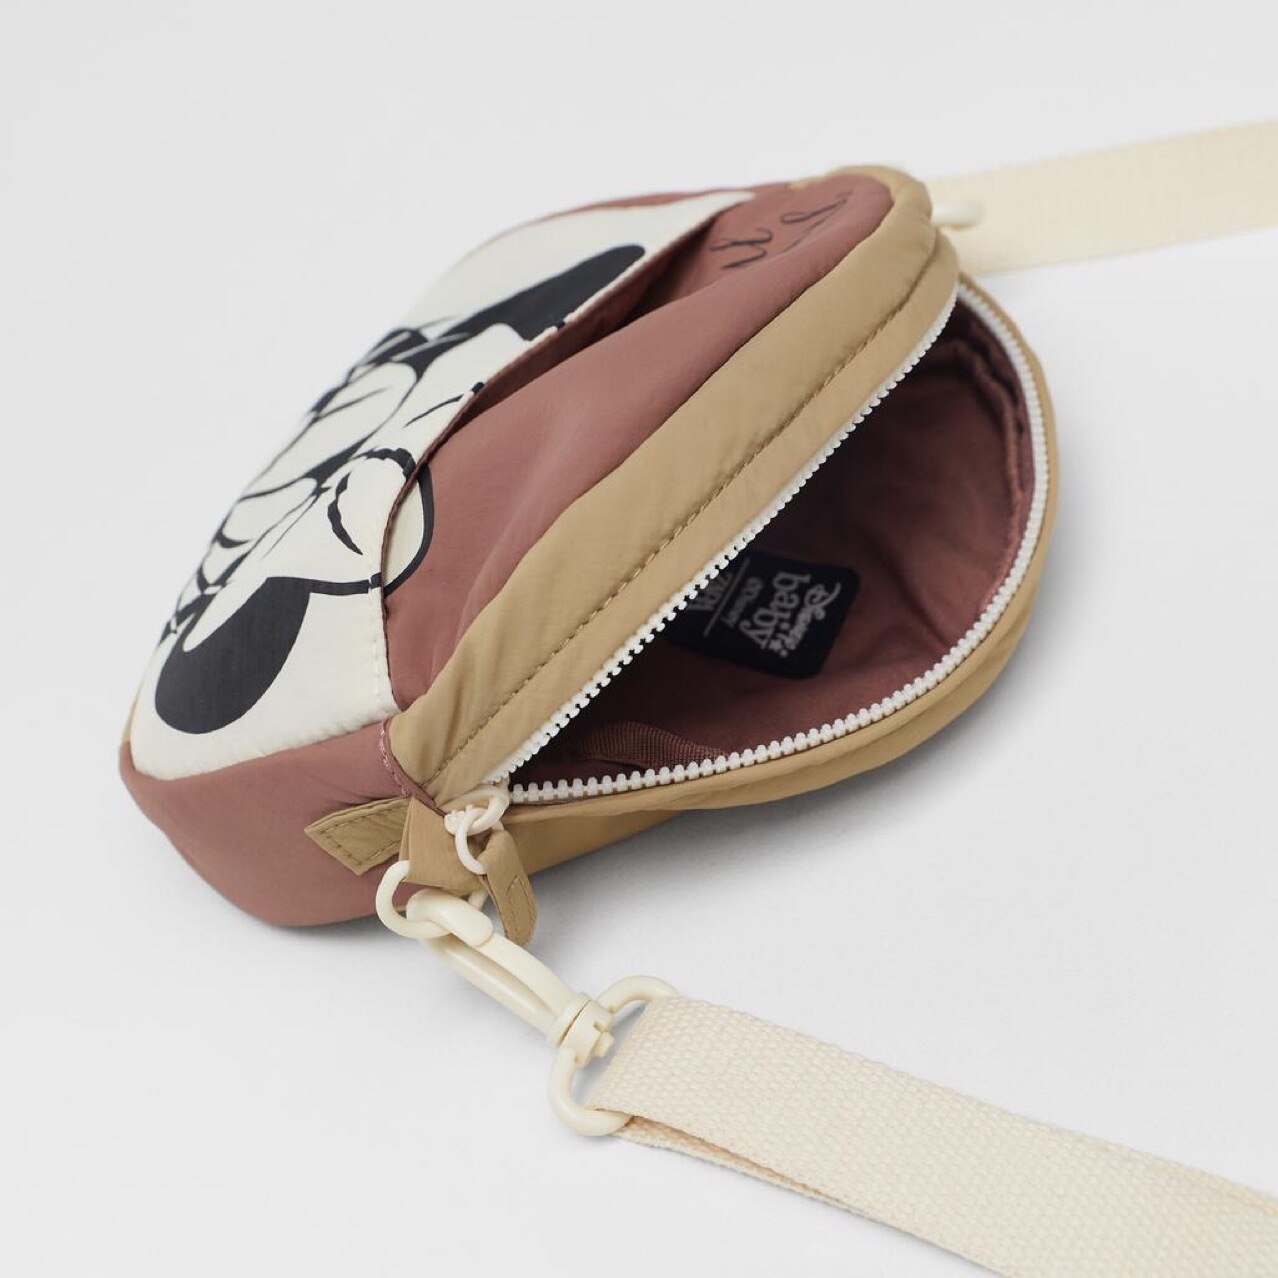 Disney Cartoon Mickey Mini Backpack minnie Mouse Kids Bag boys girls Mini handbag Cartoon Backpack New travel bag